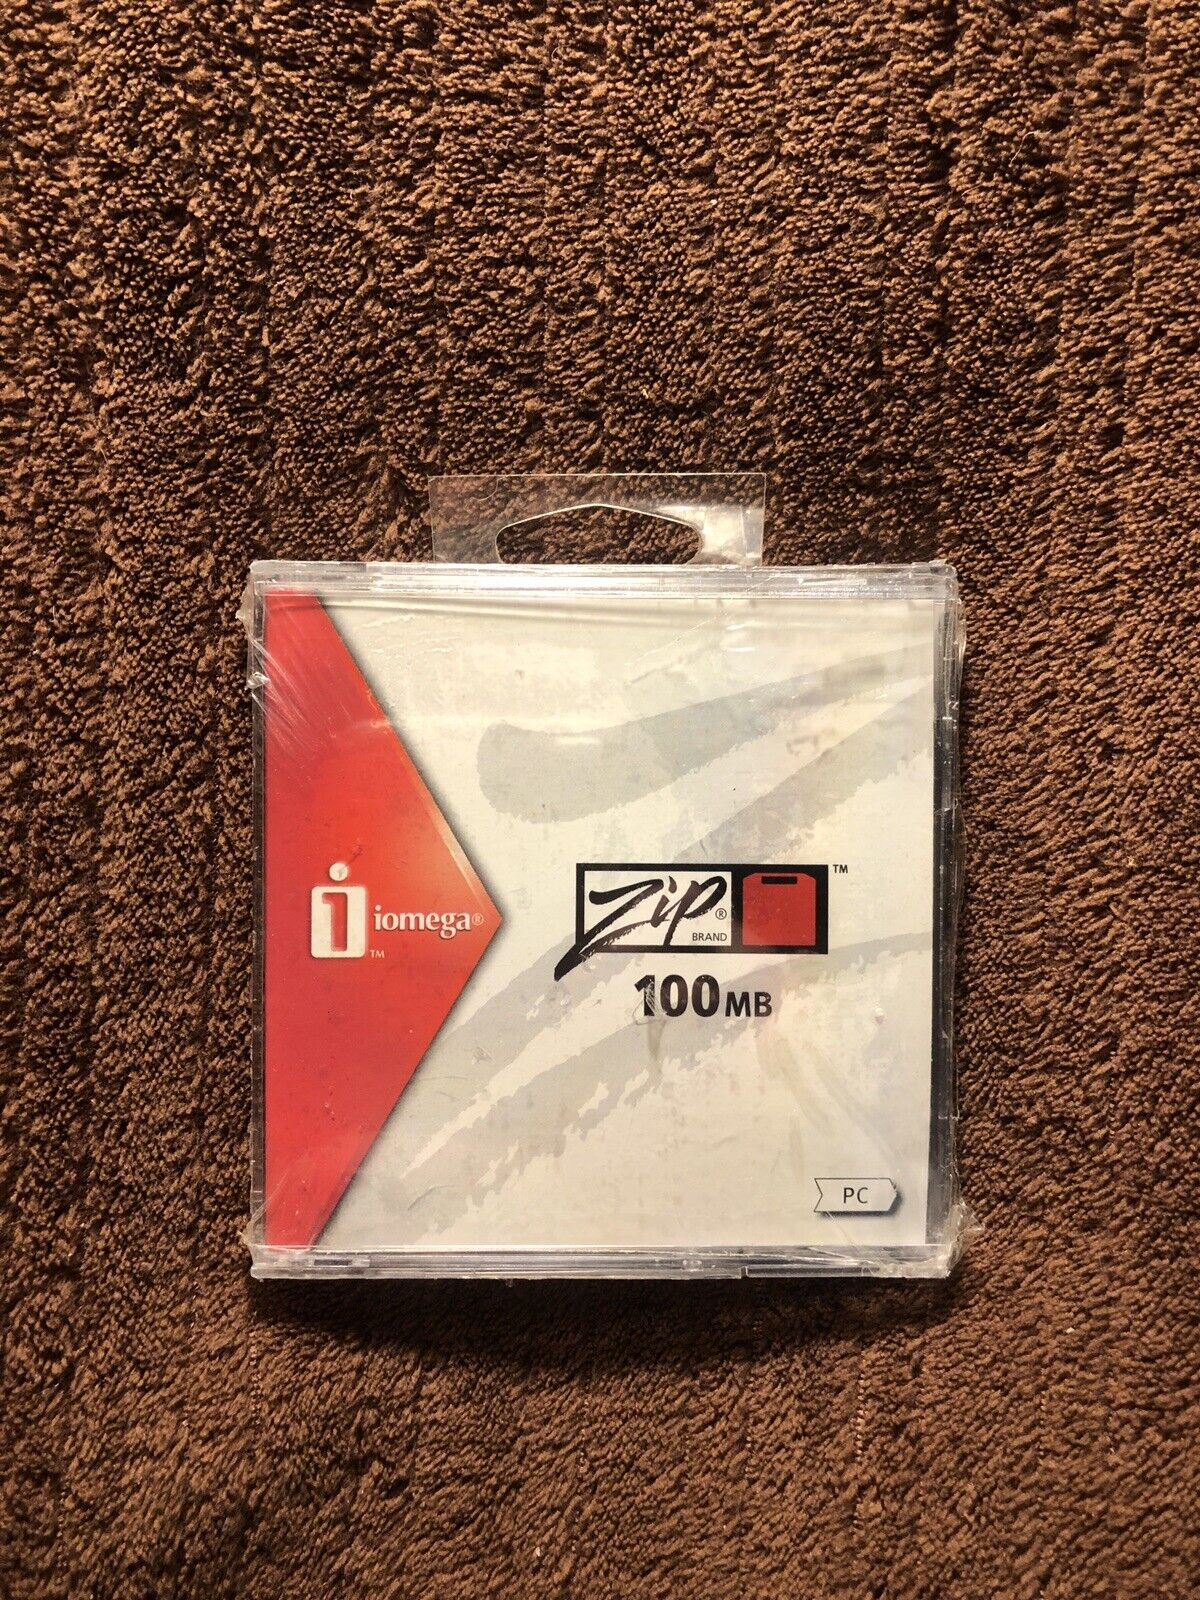 Zip Brand iomega 100MB PC *Sealed Old Stock Iomega (2000)